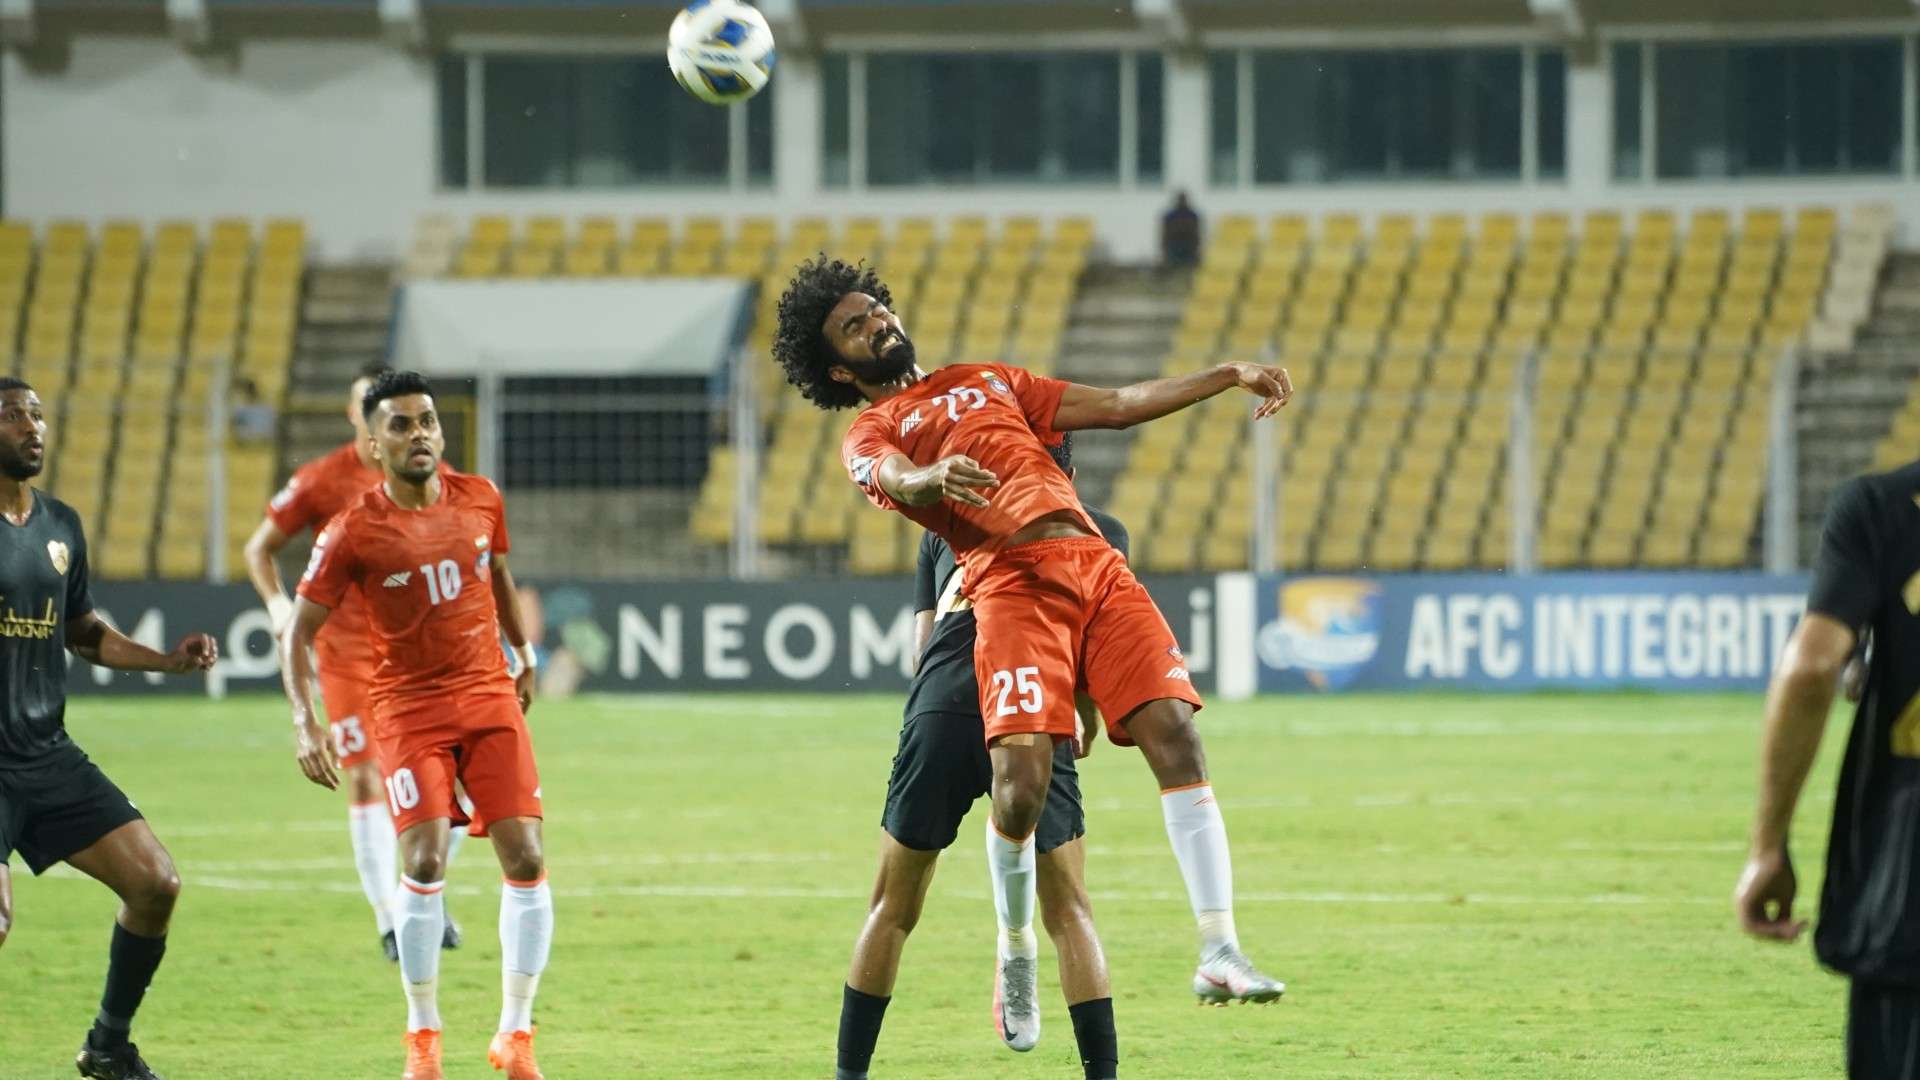 Glan Martins, Al Rayyan vs FC Goa, ACL 2021